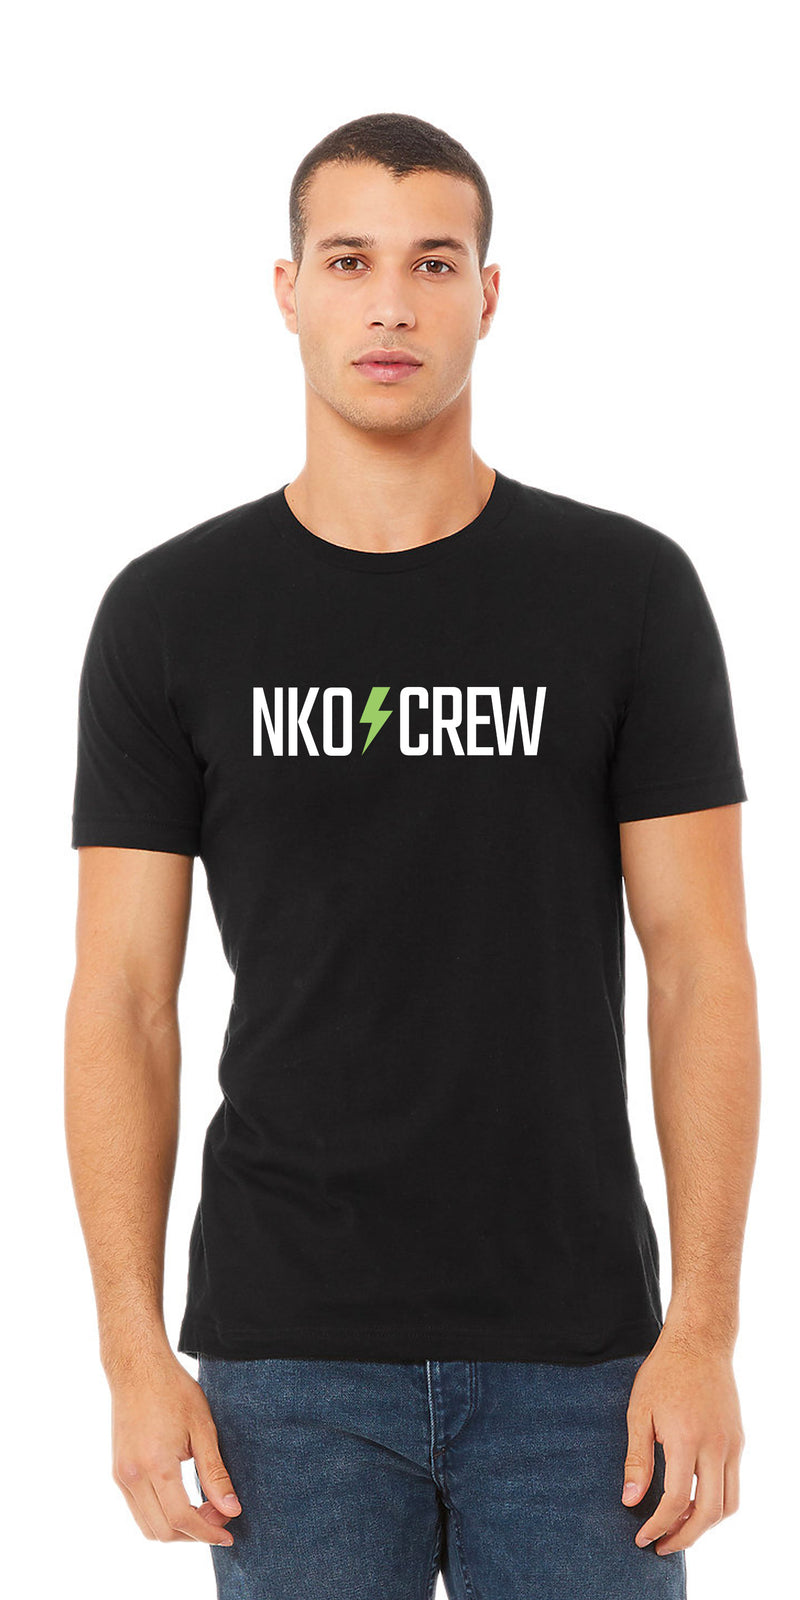 NKO Crew - Unisex/Mens Relaxed Tee